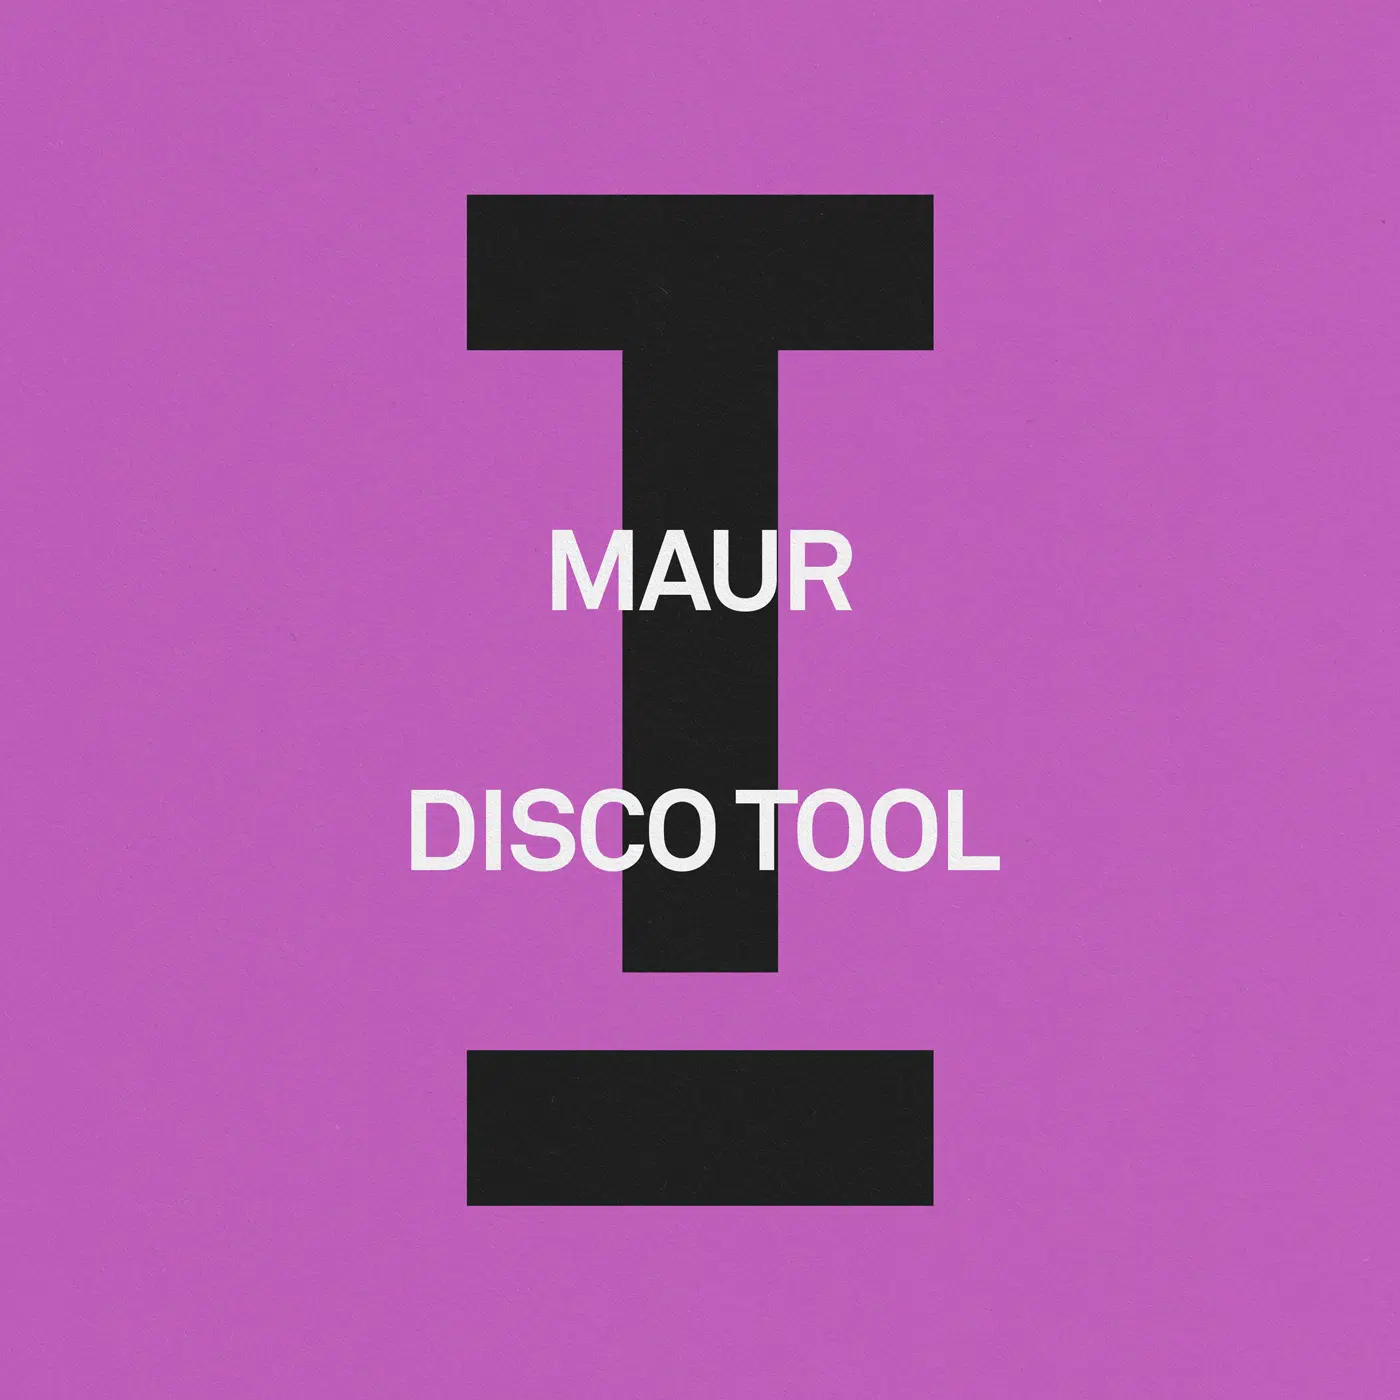 Maur “Disco Tool”